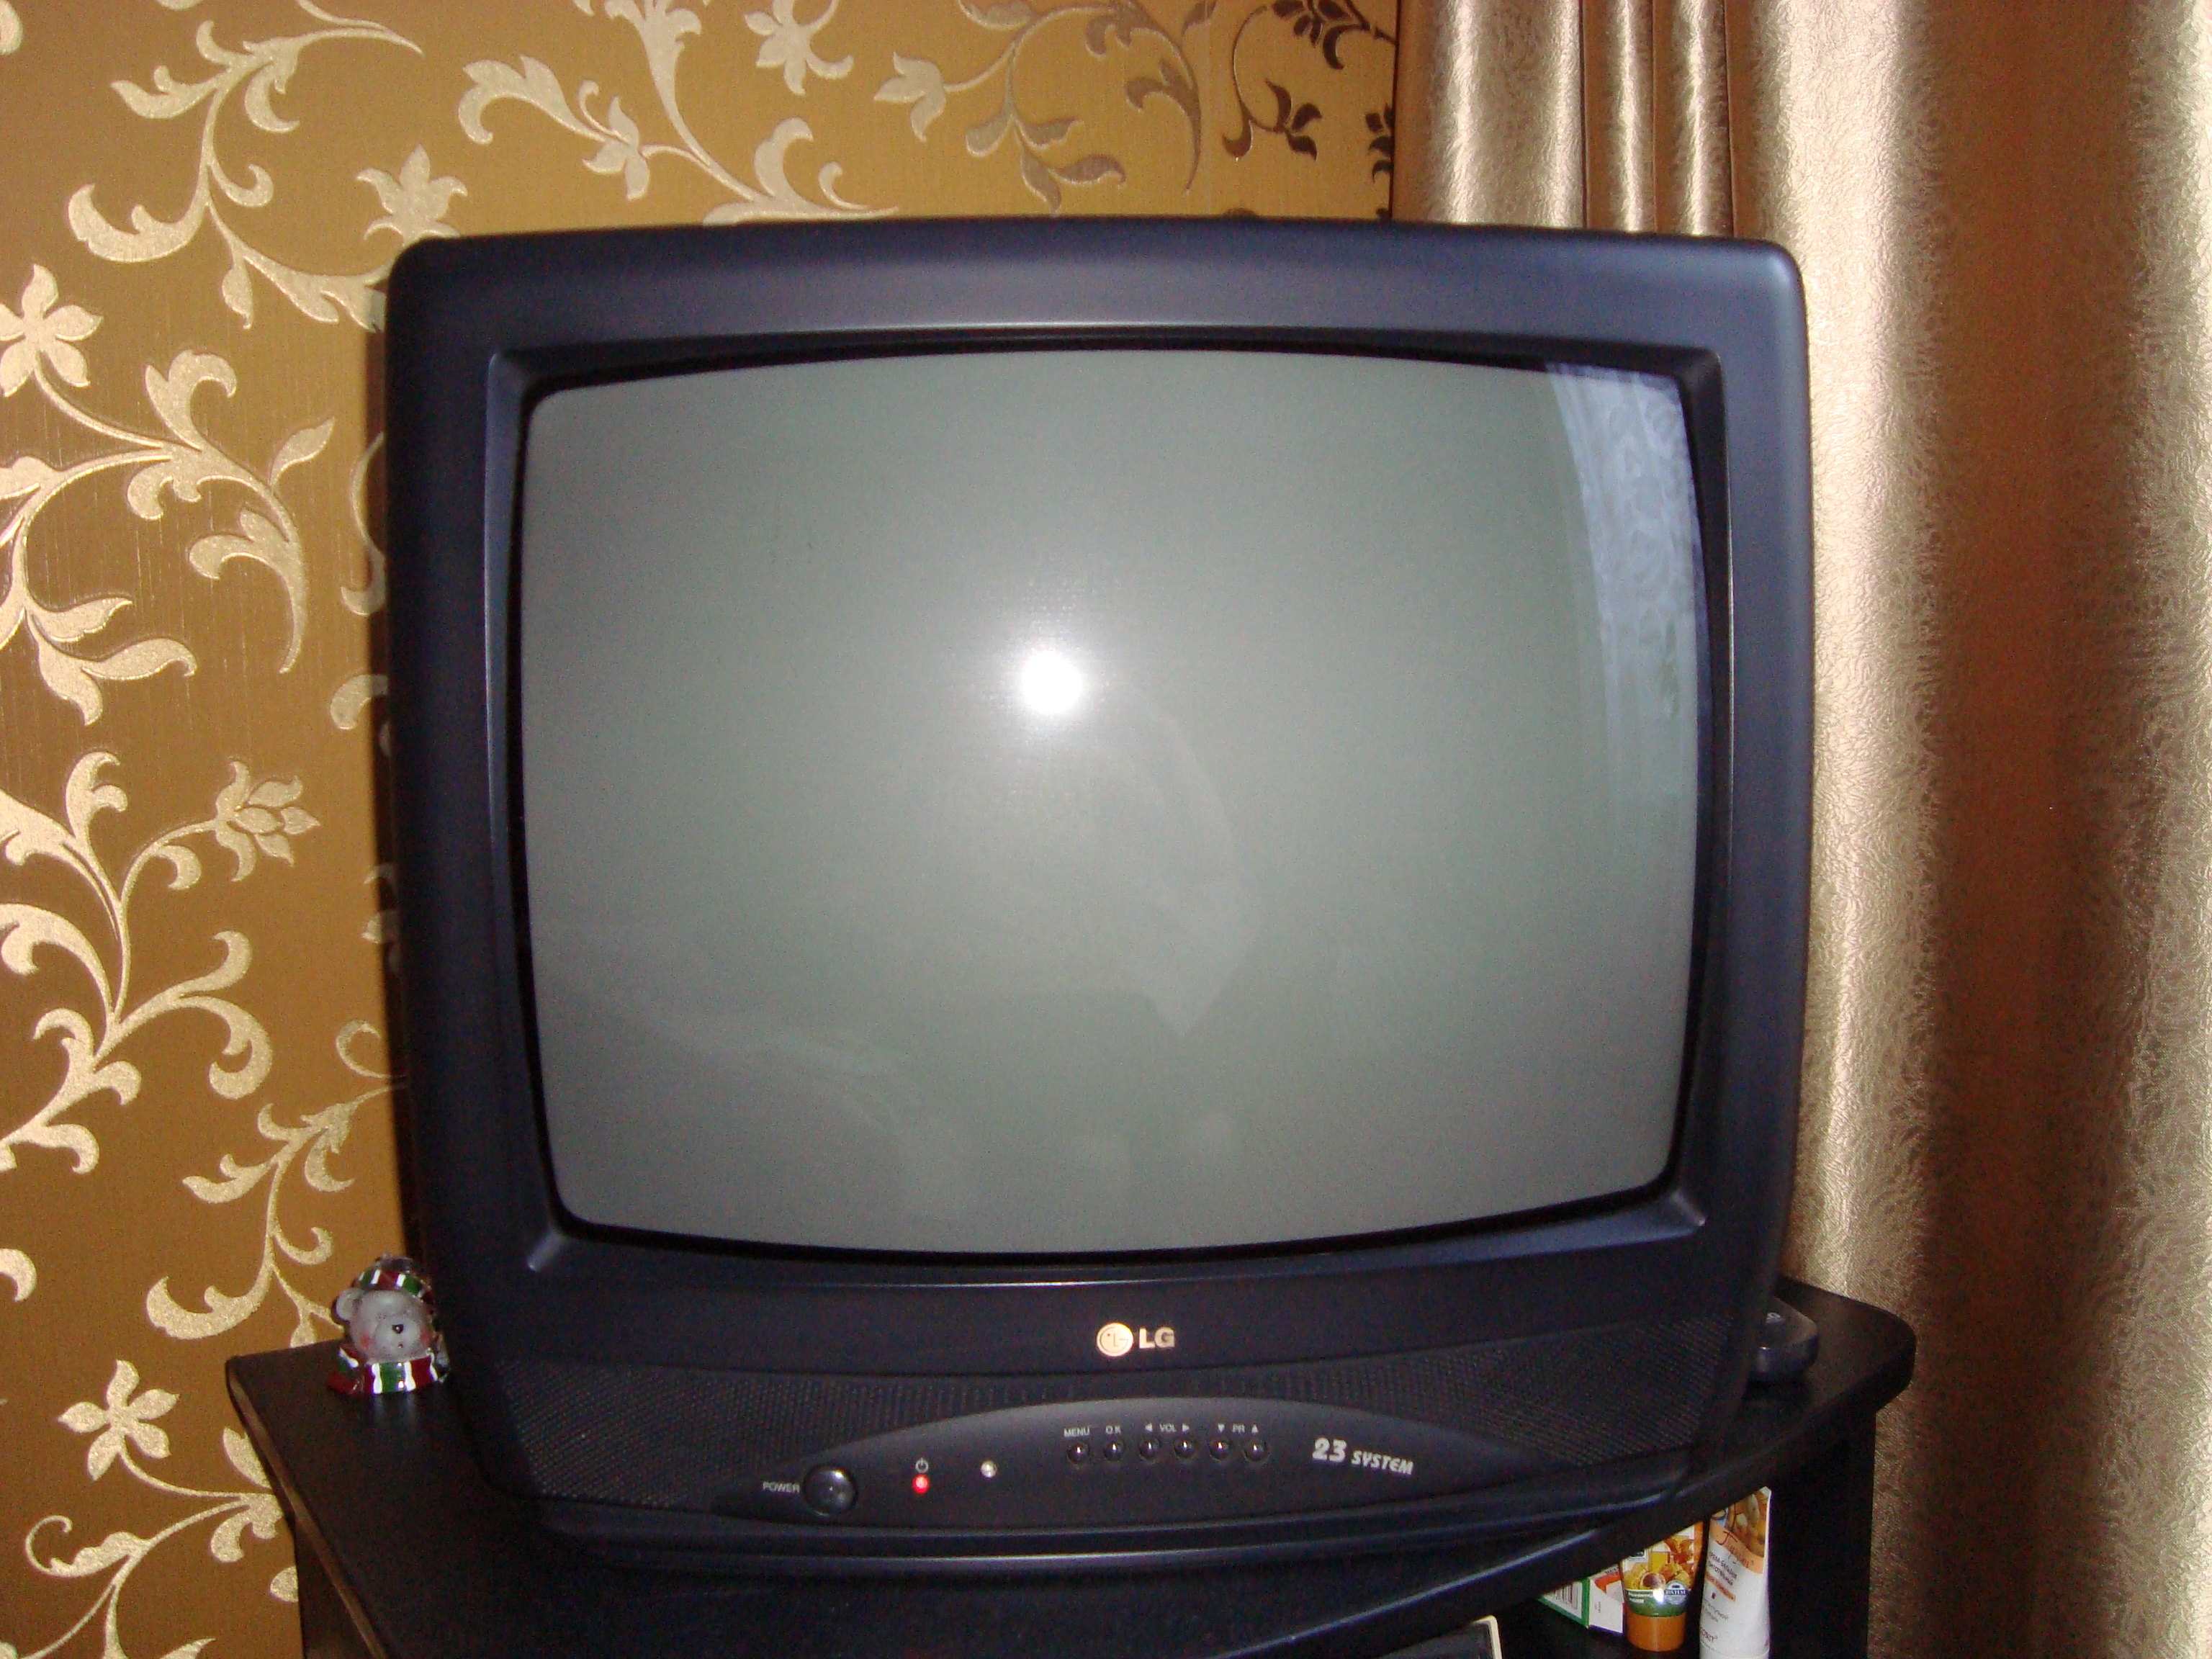 Авито куплю маленький телевизор. LG 21 дюйм кинескопный. Телевизор LG 21 дюйм кинескопный. Телевизор LG CF-21f39. LG CF 20f30.